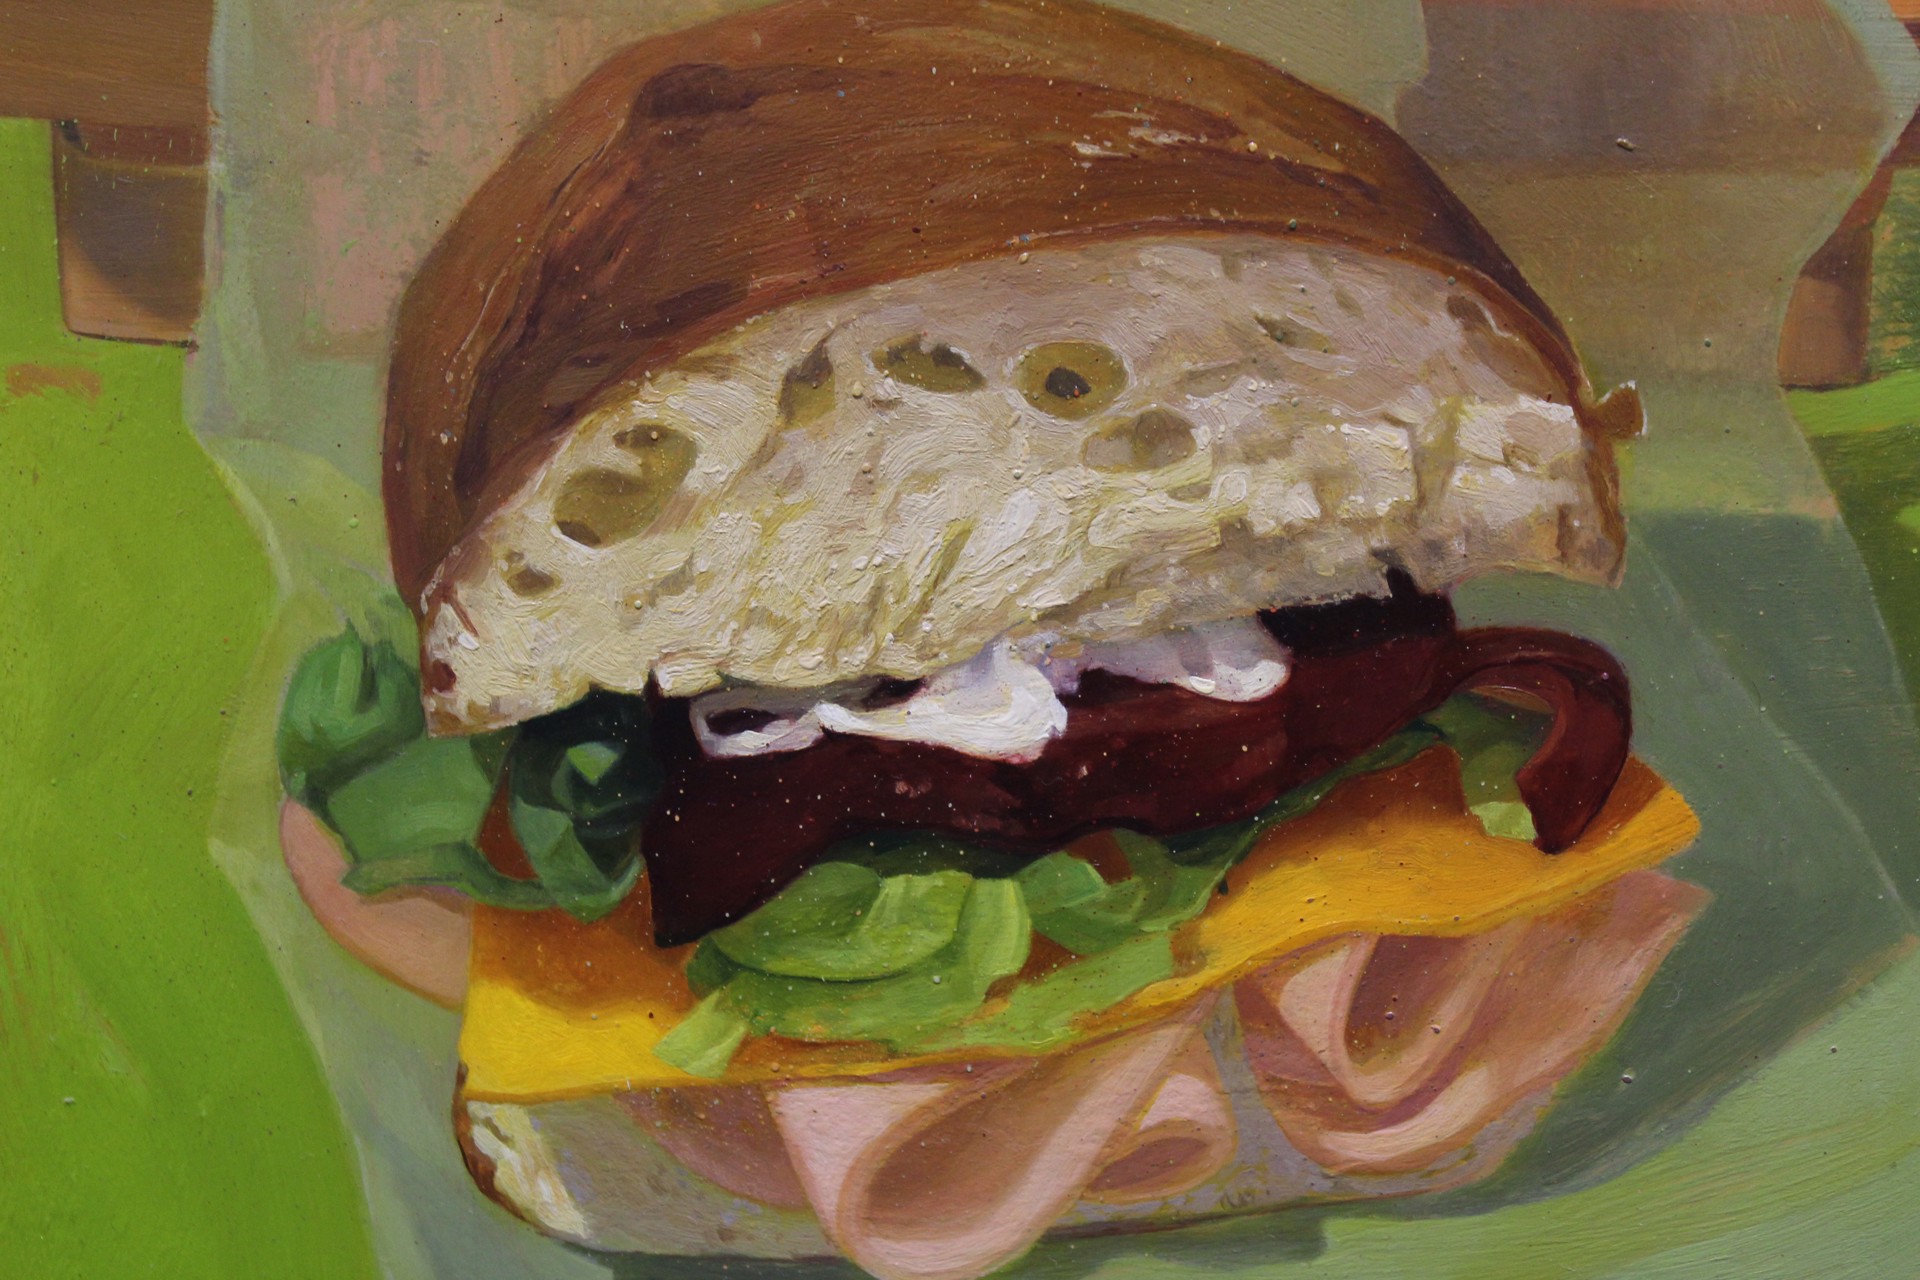 Turkey Sandwich with Apples by Benjamin J. Shamback